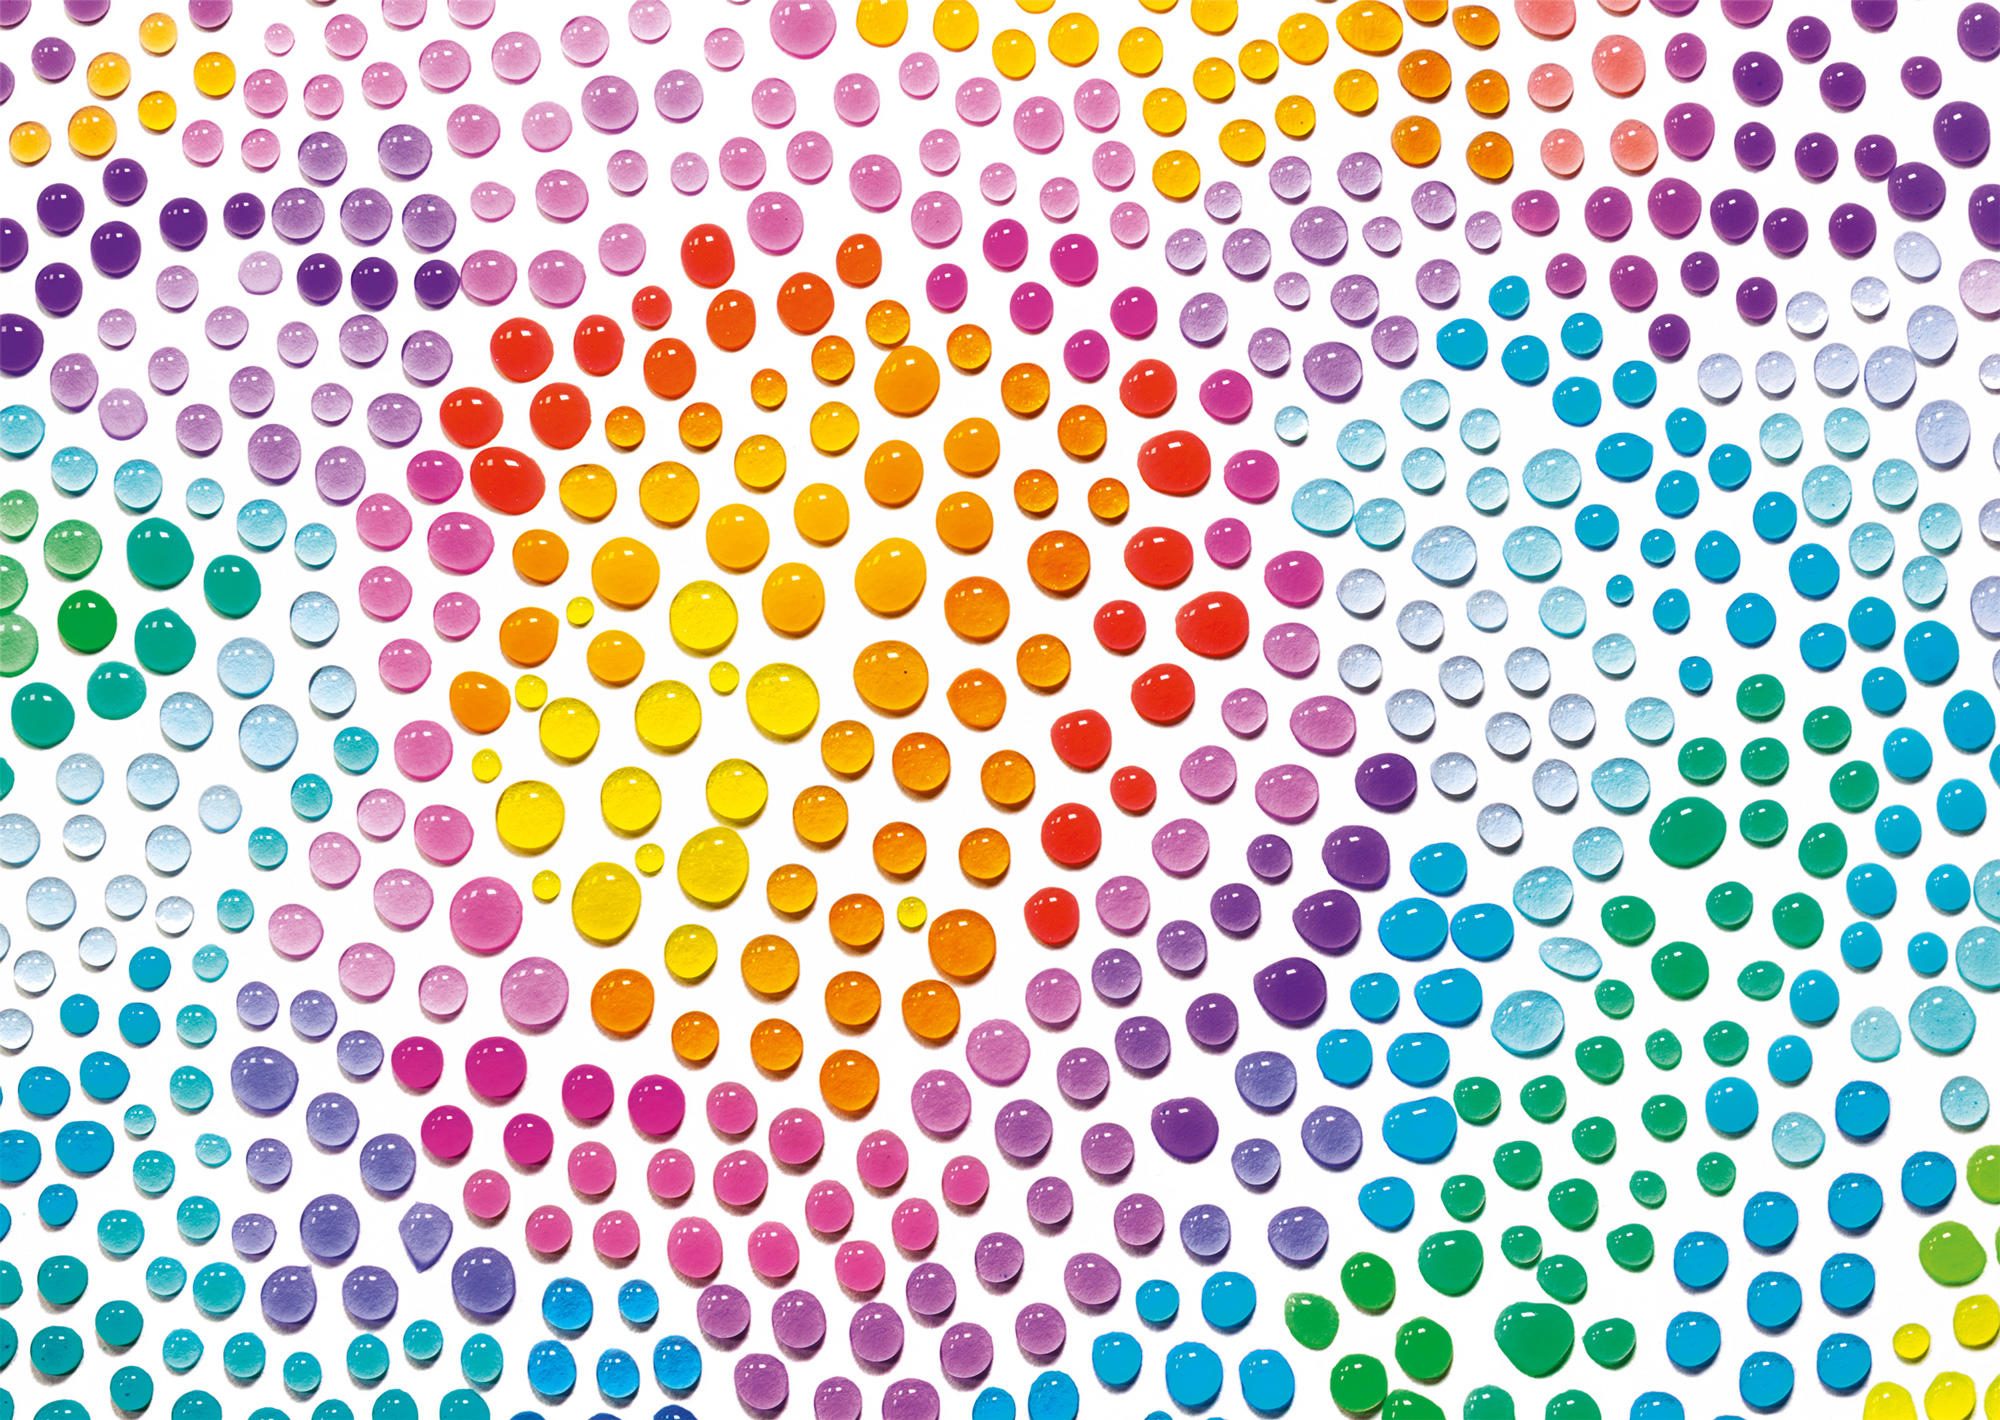 Puzzle Josie Lewis: Bolhas de sabão coloridas